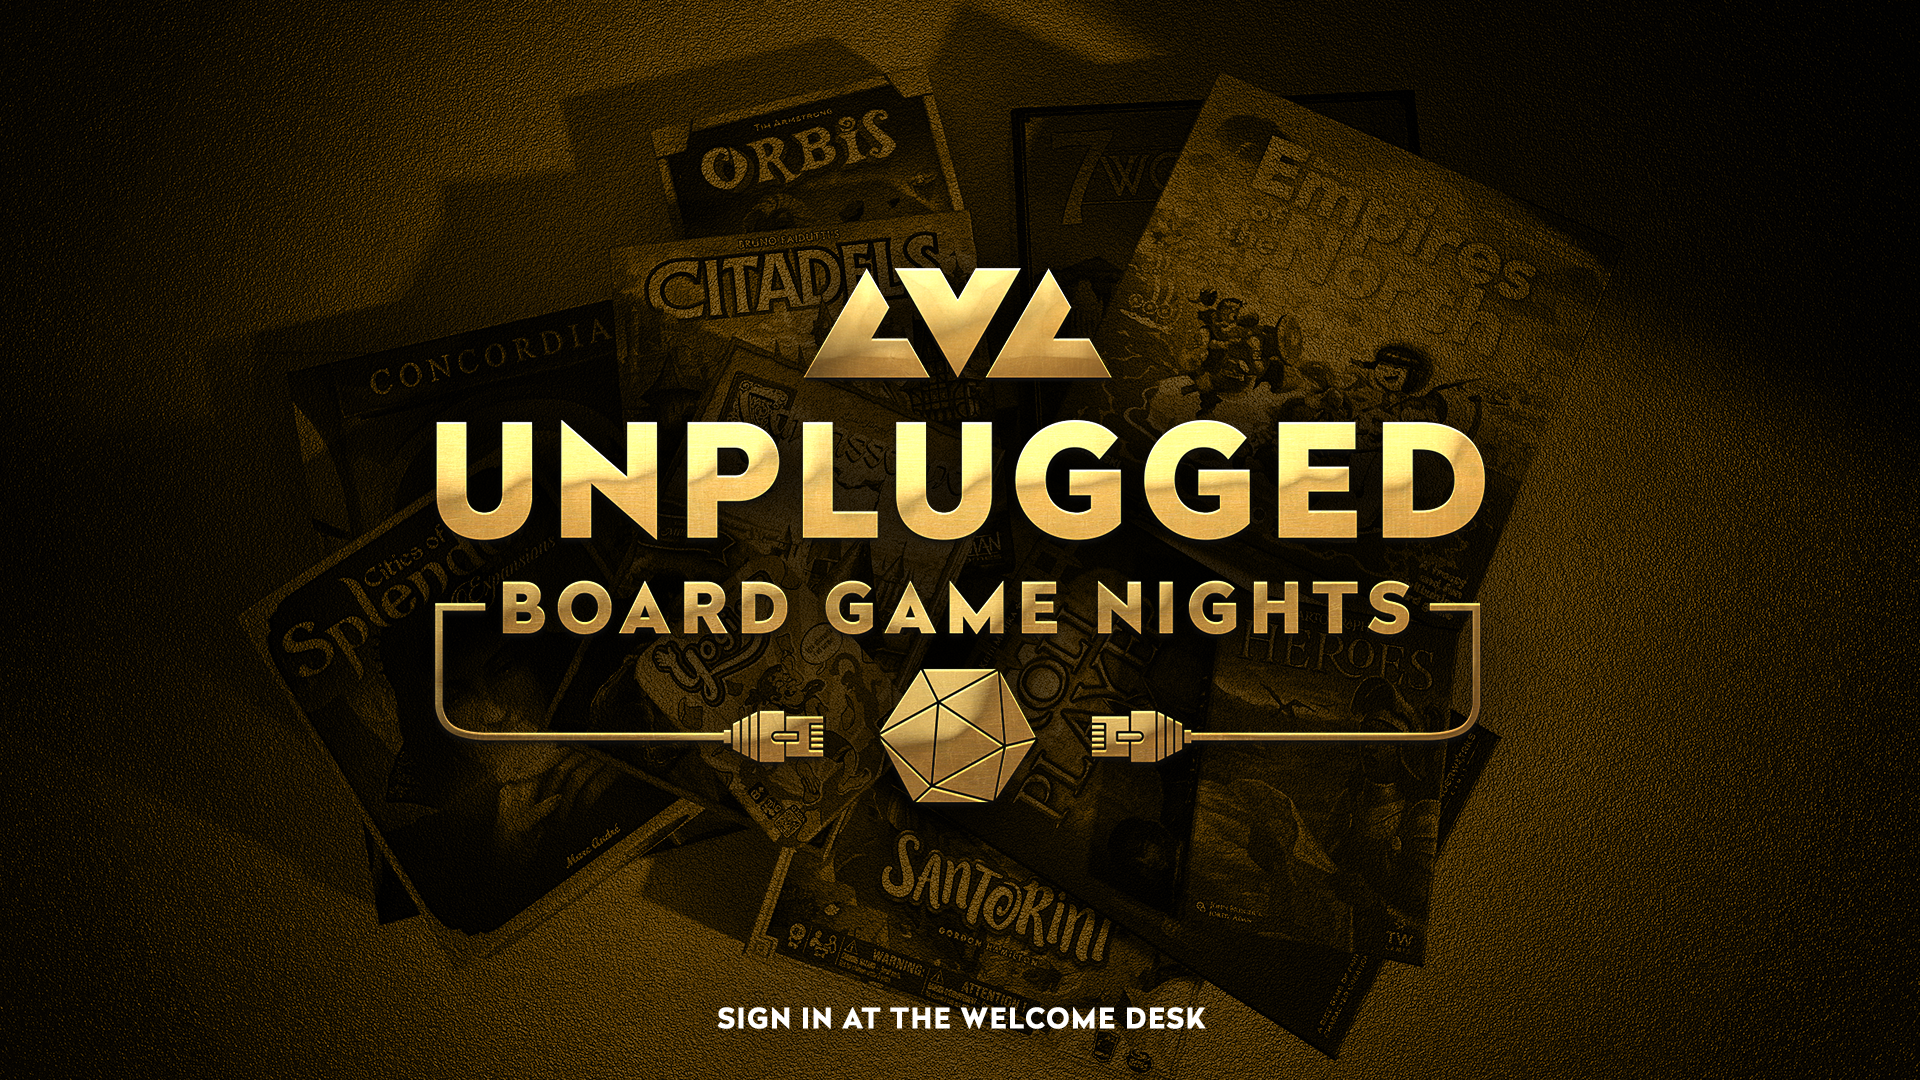 LVL unplugged board games night photo